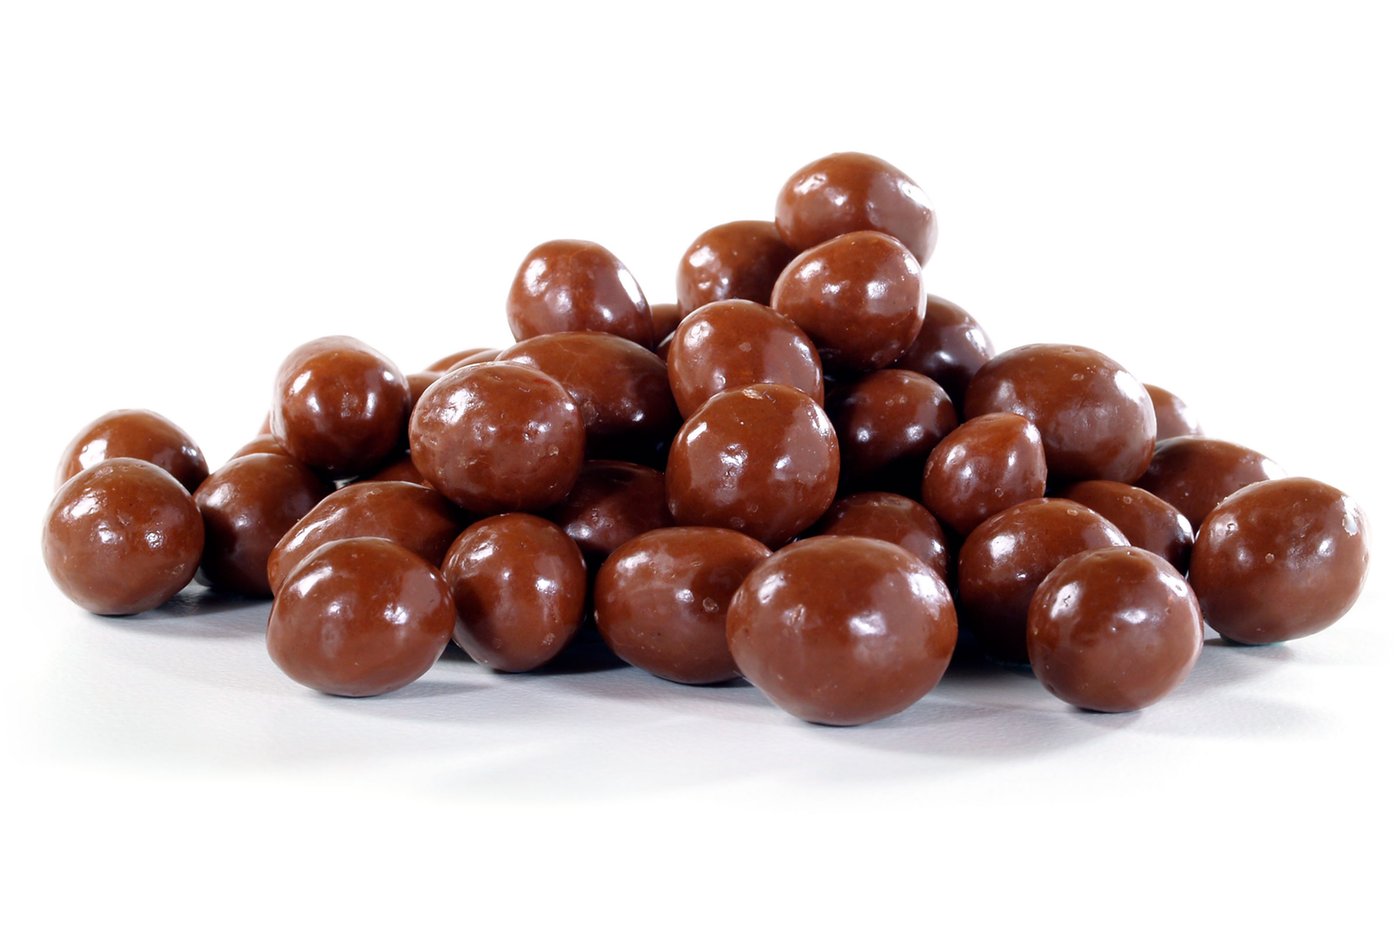 Chocolate Peanuts (No Sugar Added) photo